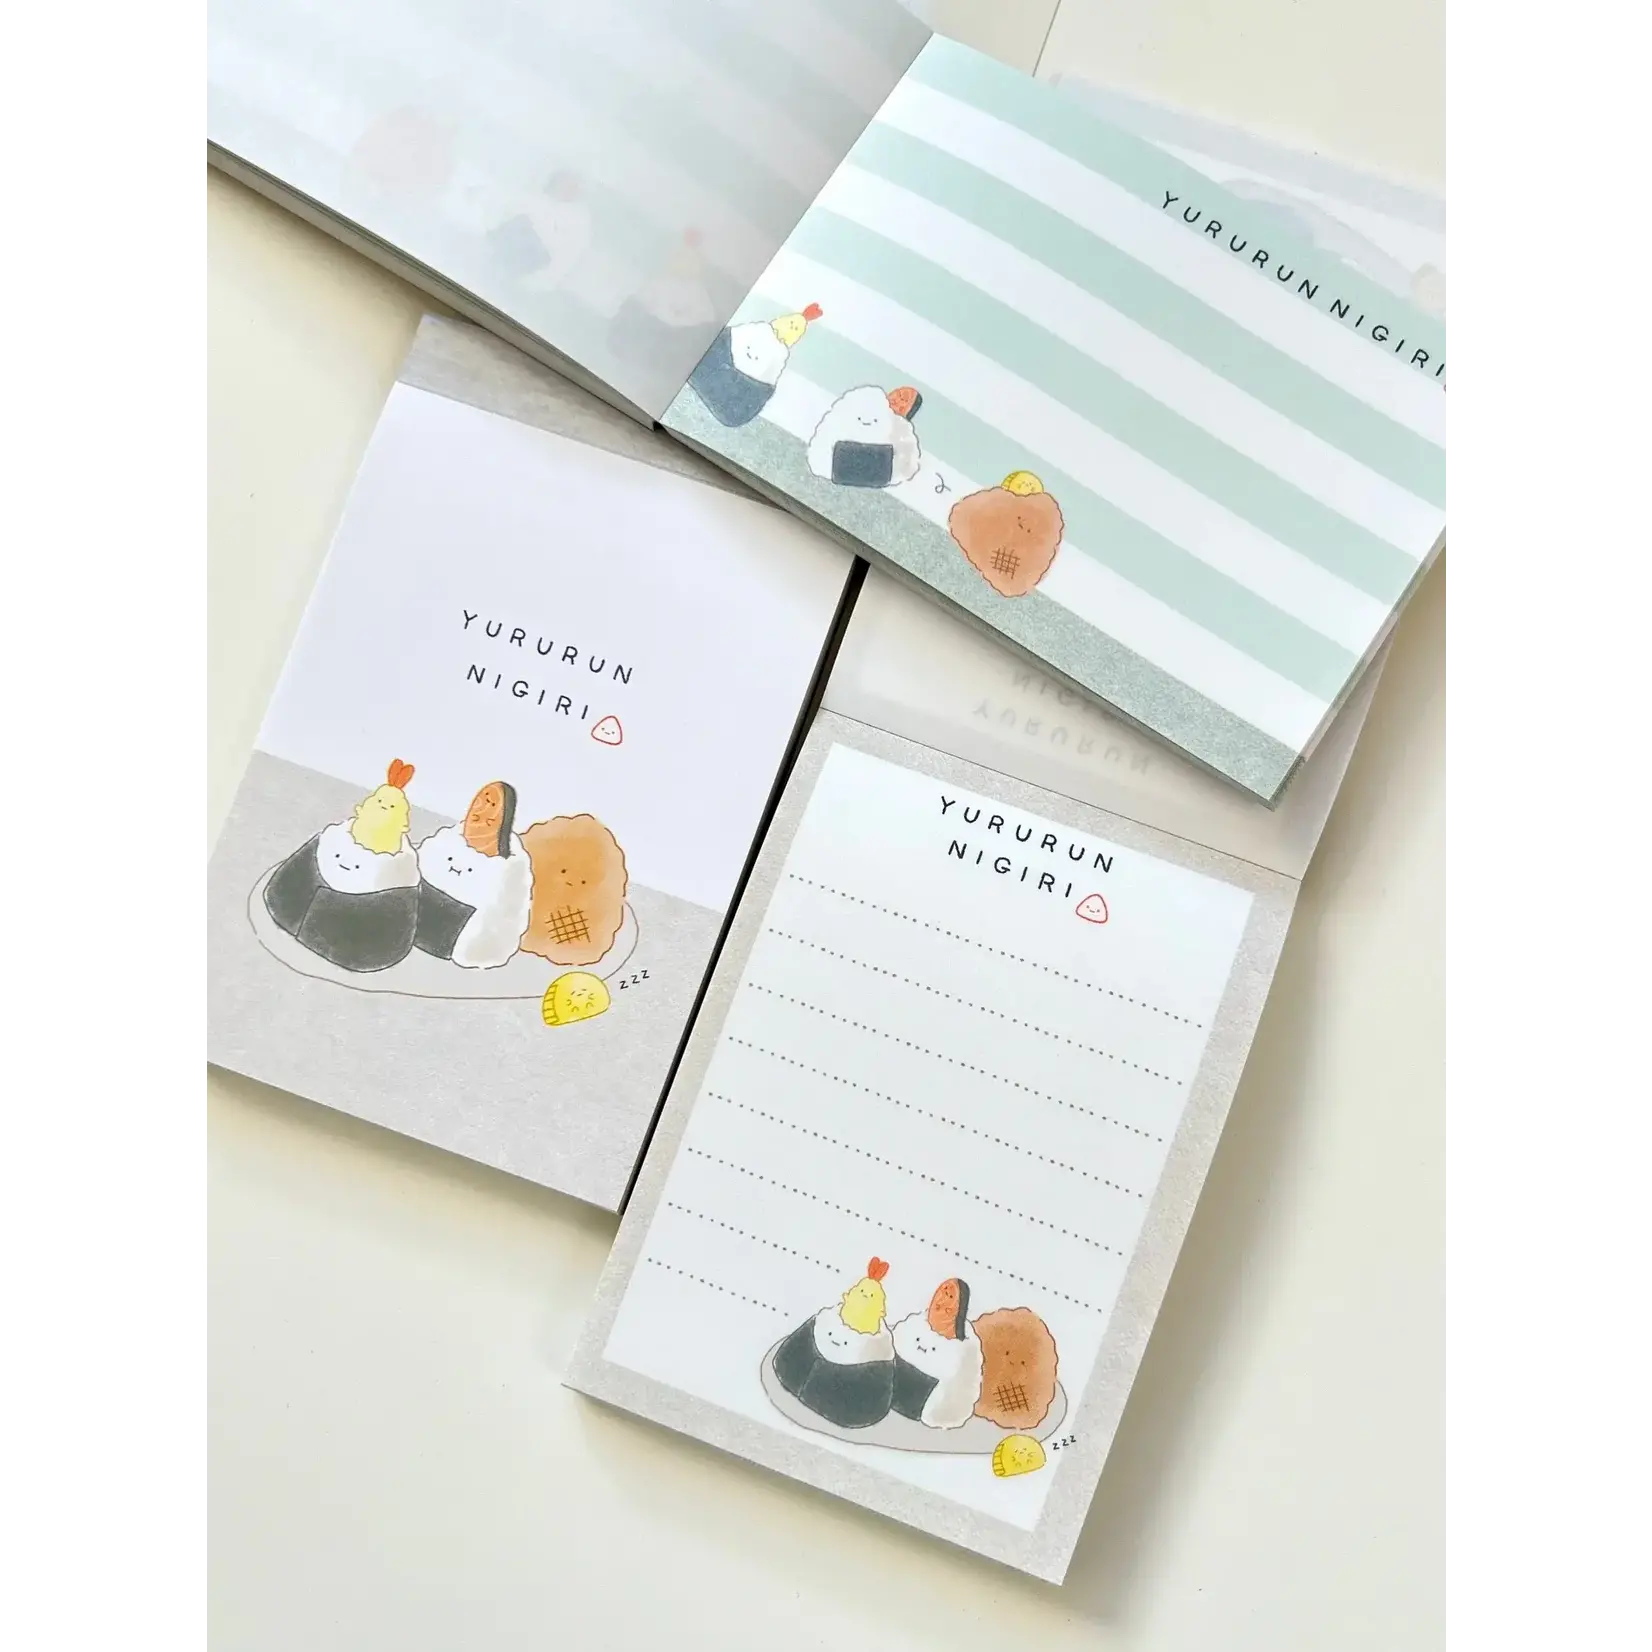 Crux Yururun Nigiri Lunch Mini Notepads - 112217